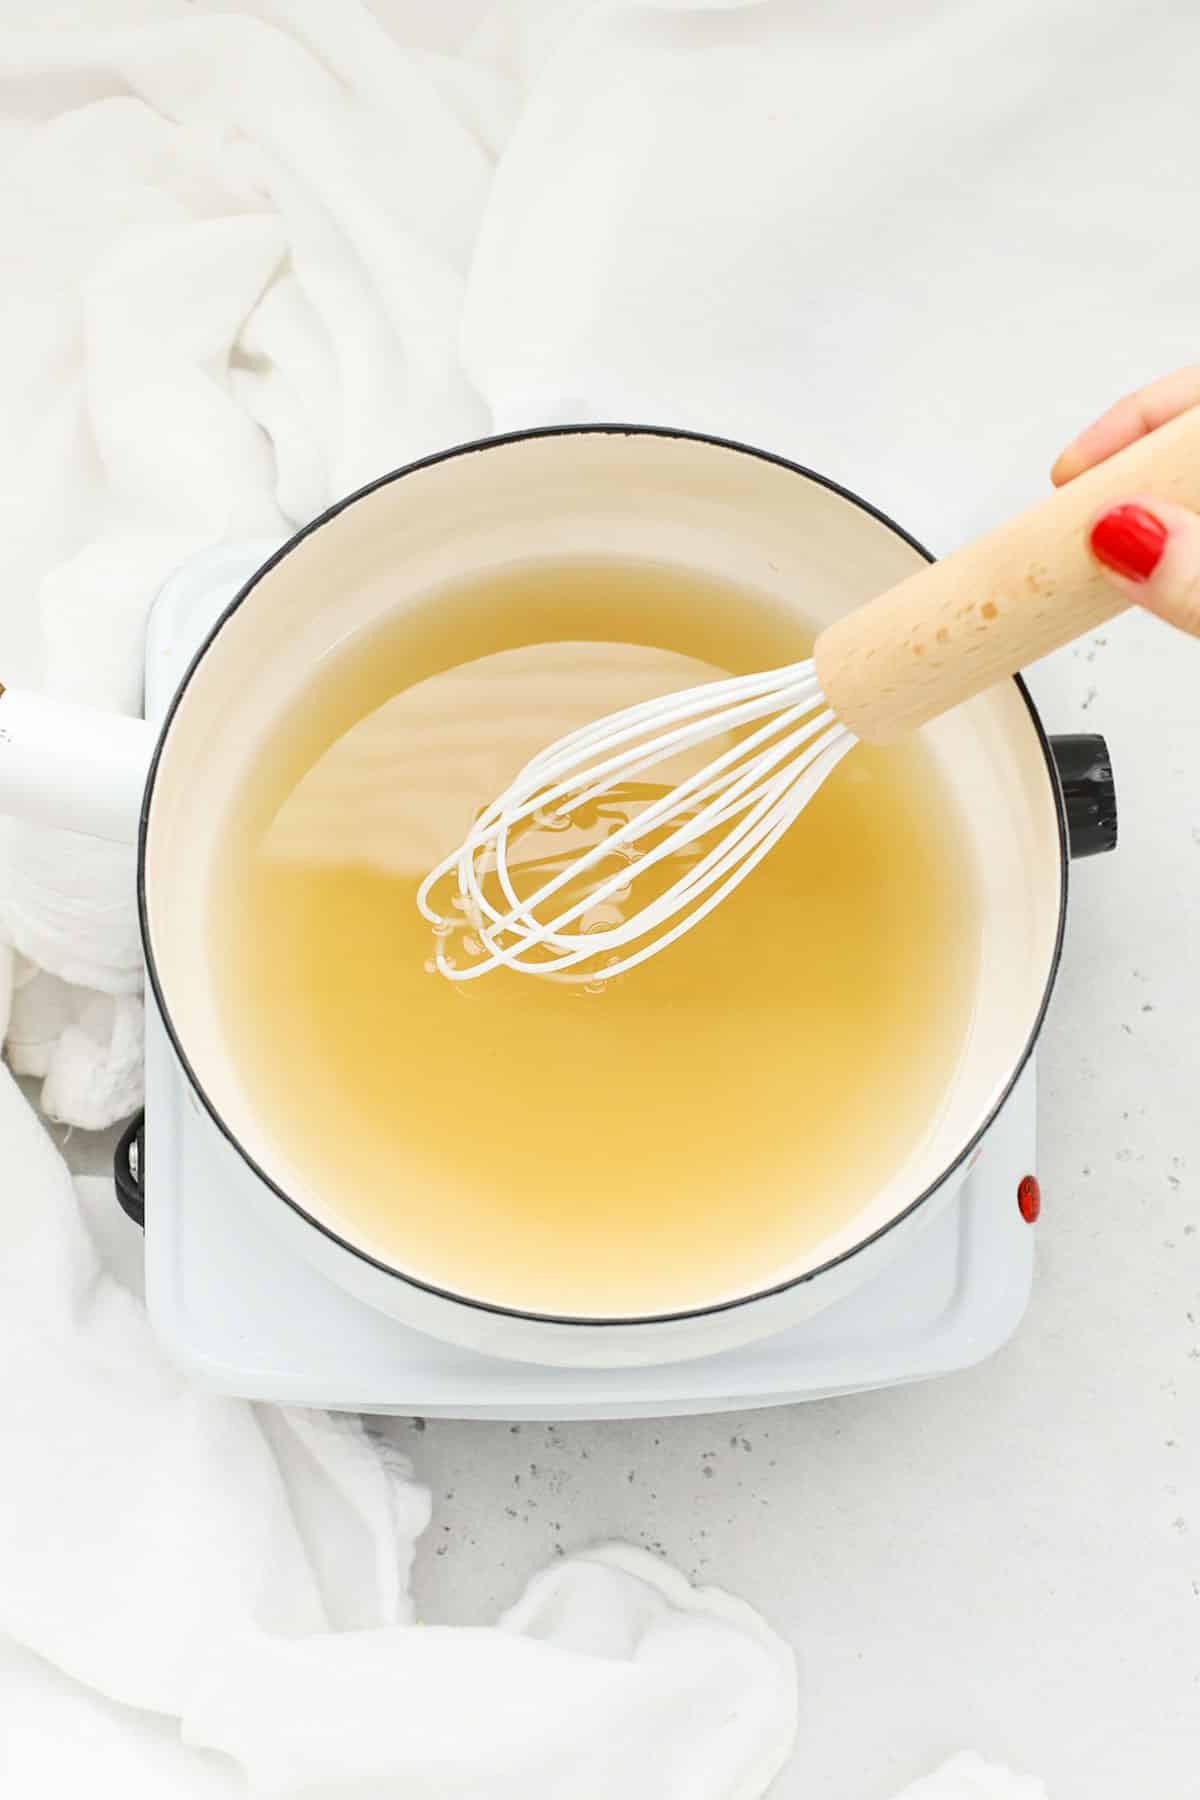 Dissolving sugar in water in a white saucepan